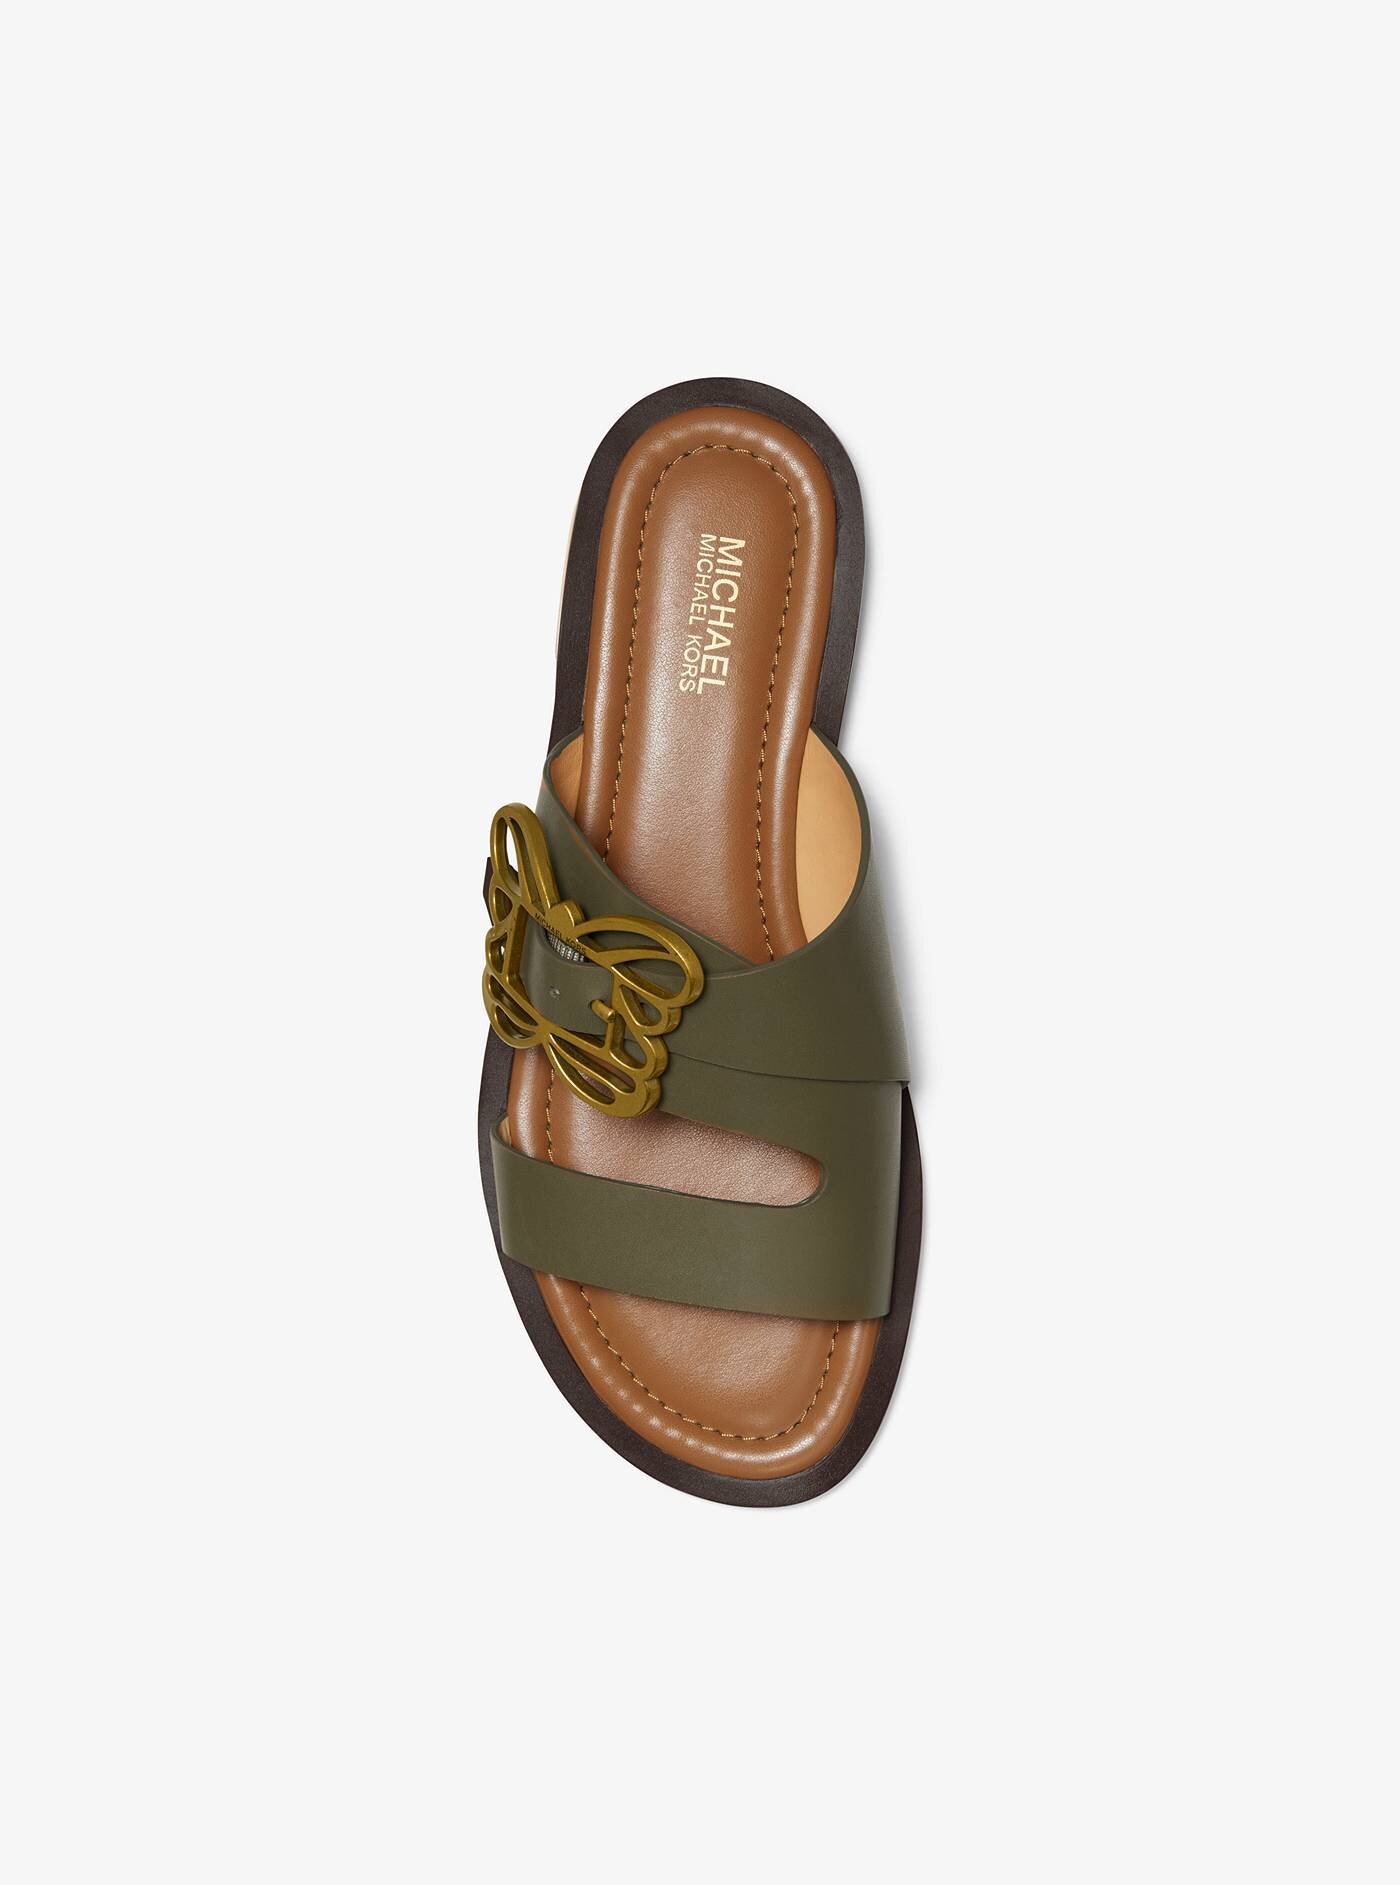 michael kors olive sandals